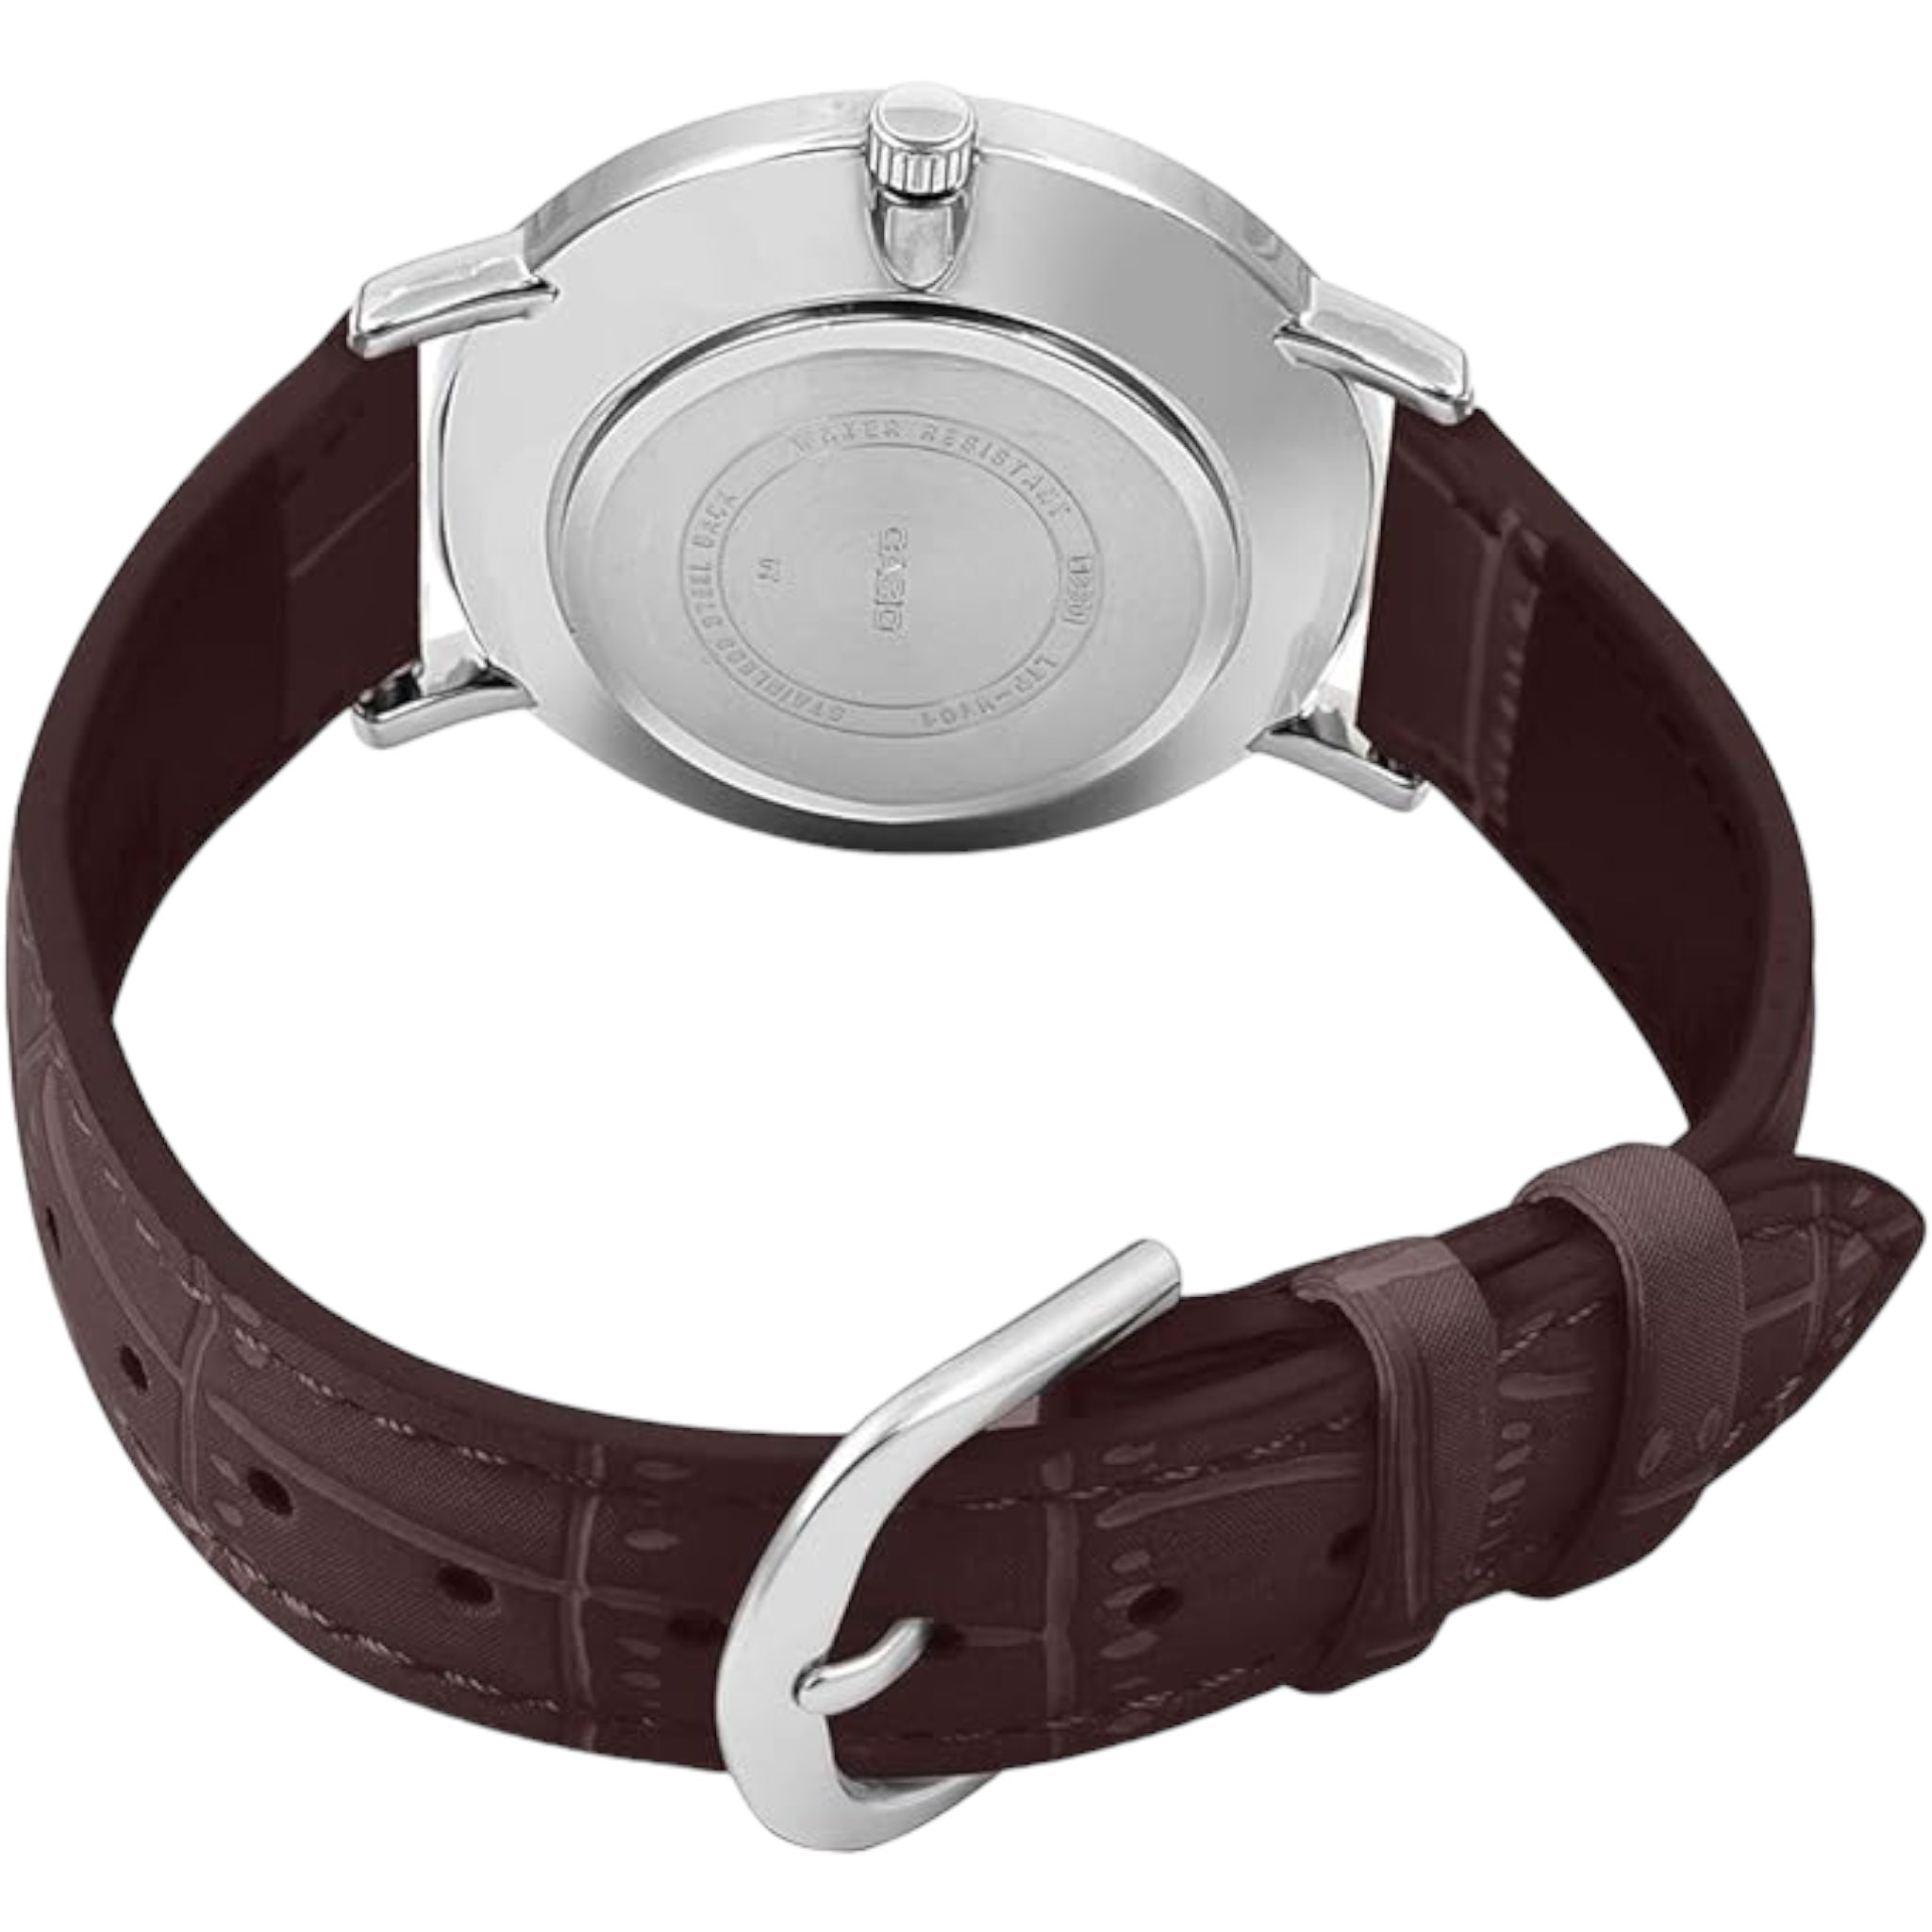 Casio Women's Watch LTP-VT01L-7B2 leather strap